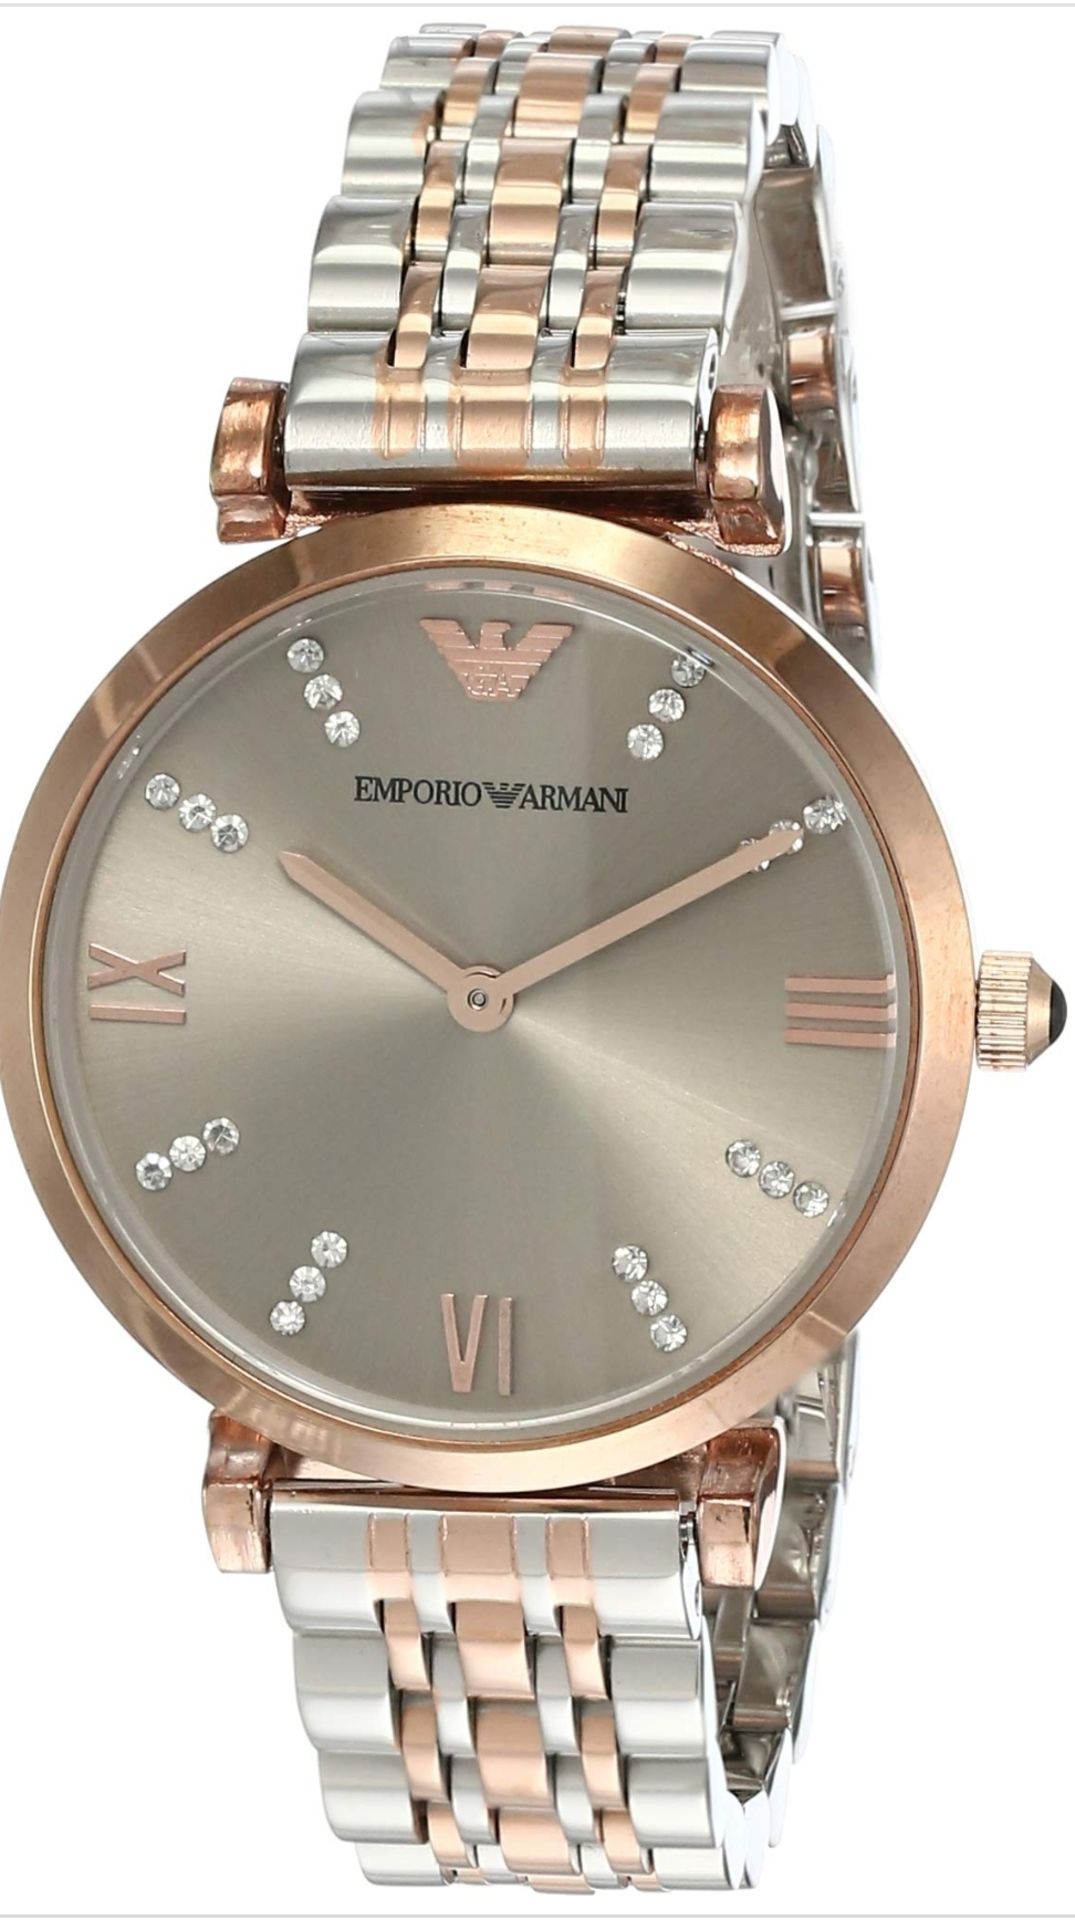 Emporio Armani AR1840 Women's Quartz Designer Watch - Rose Gold & Silver - Image 4 of 5